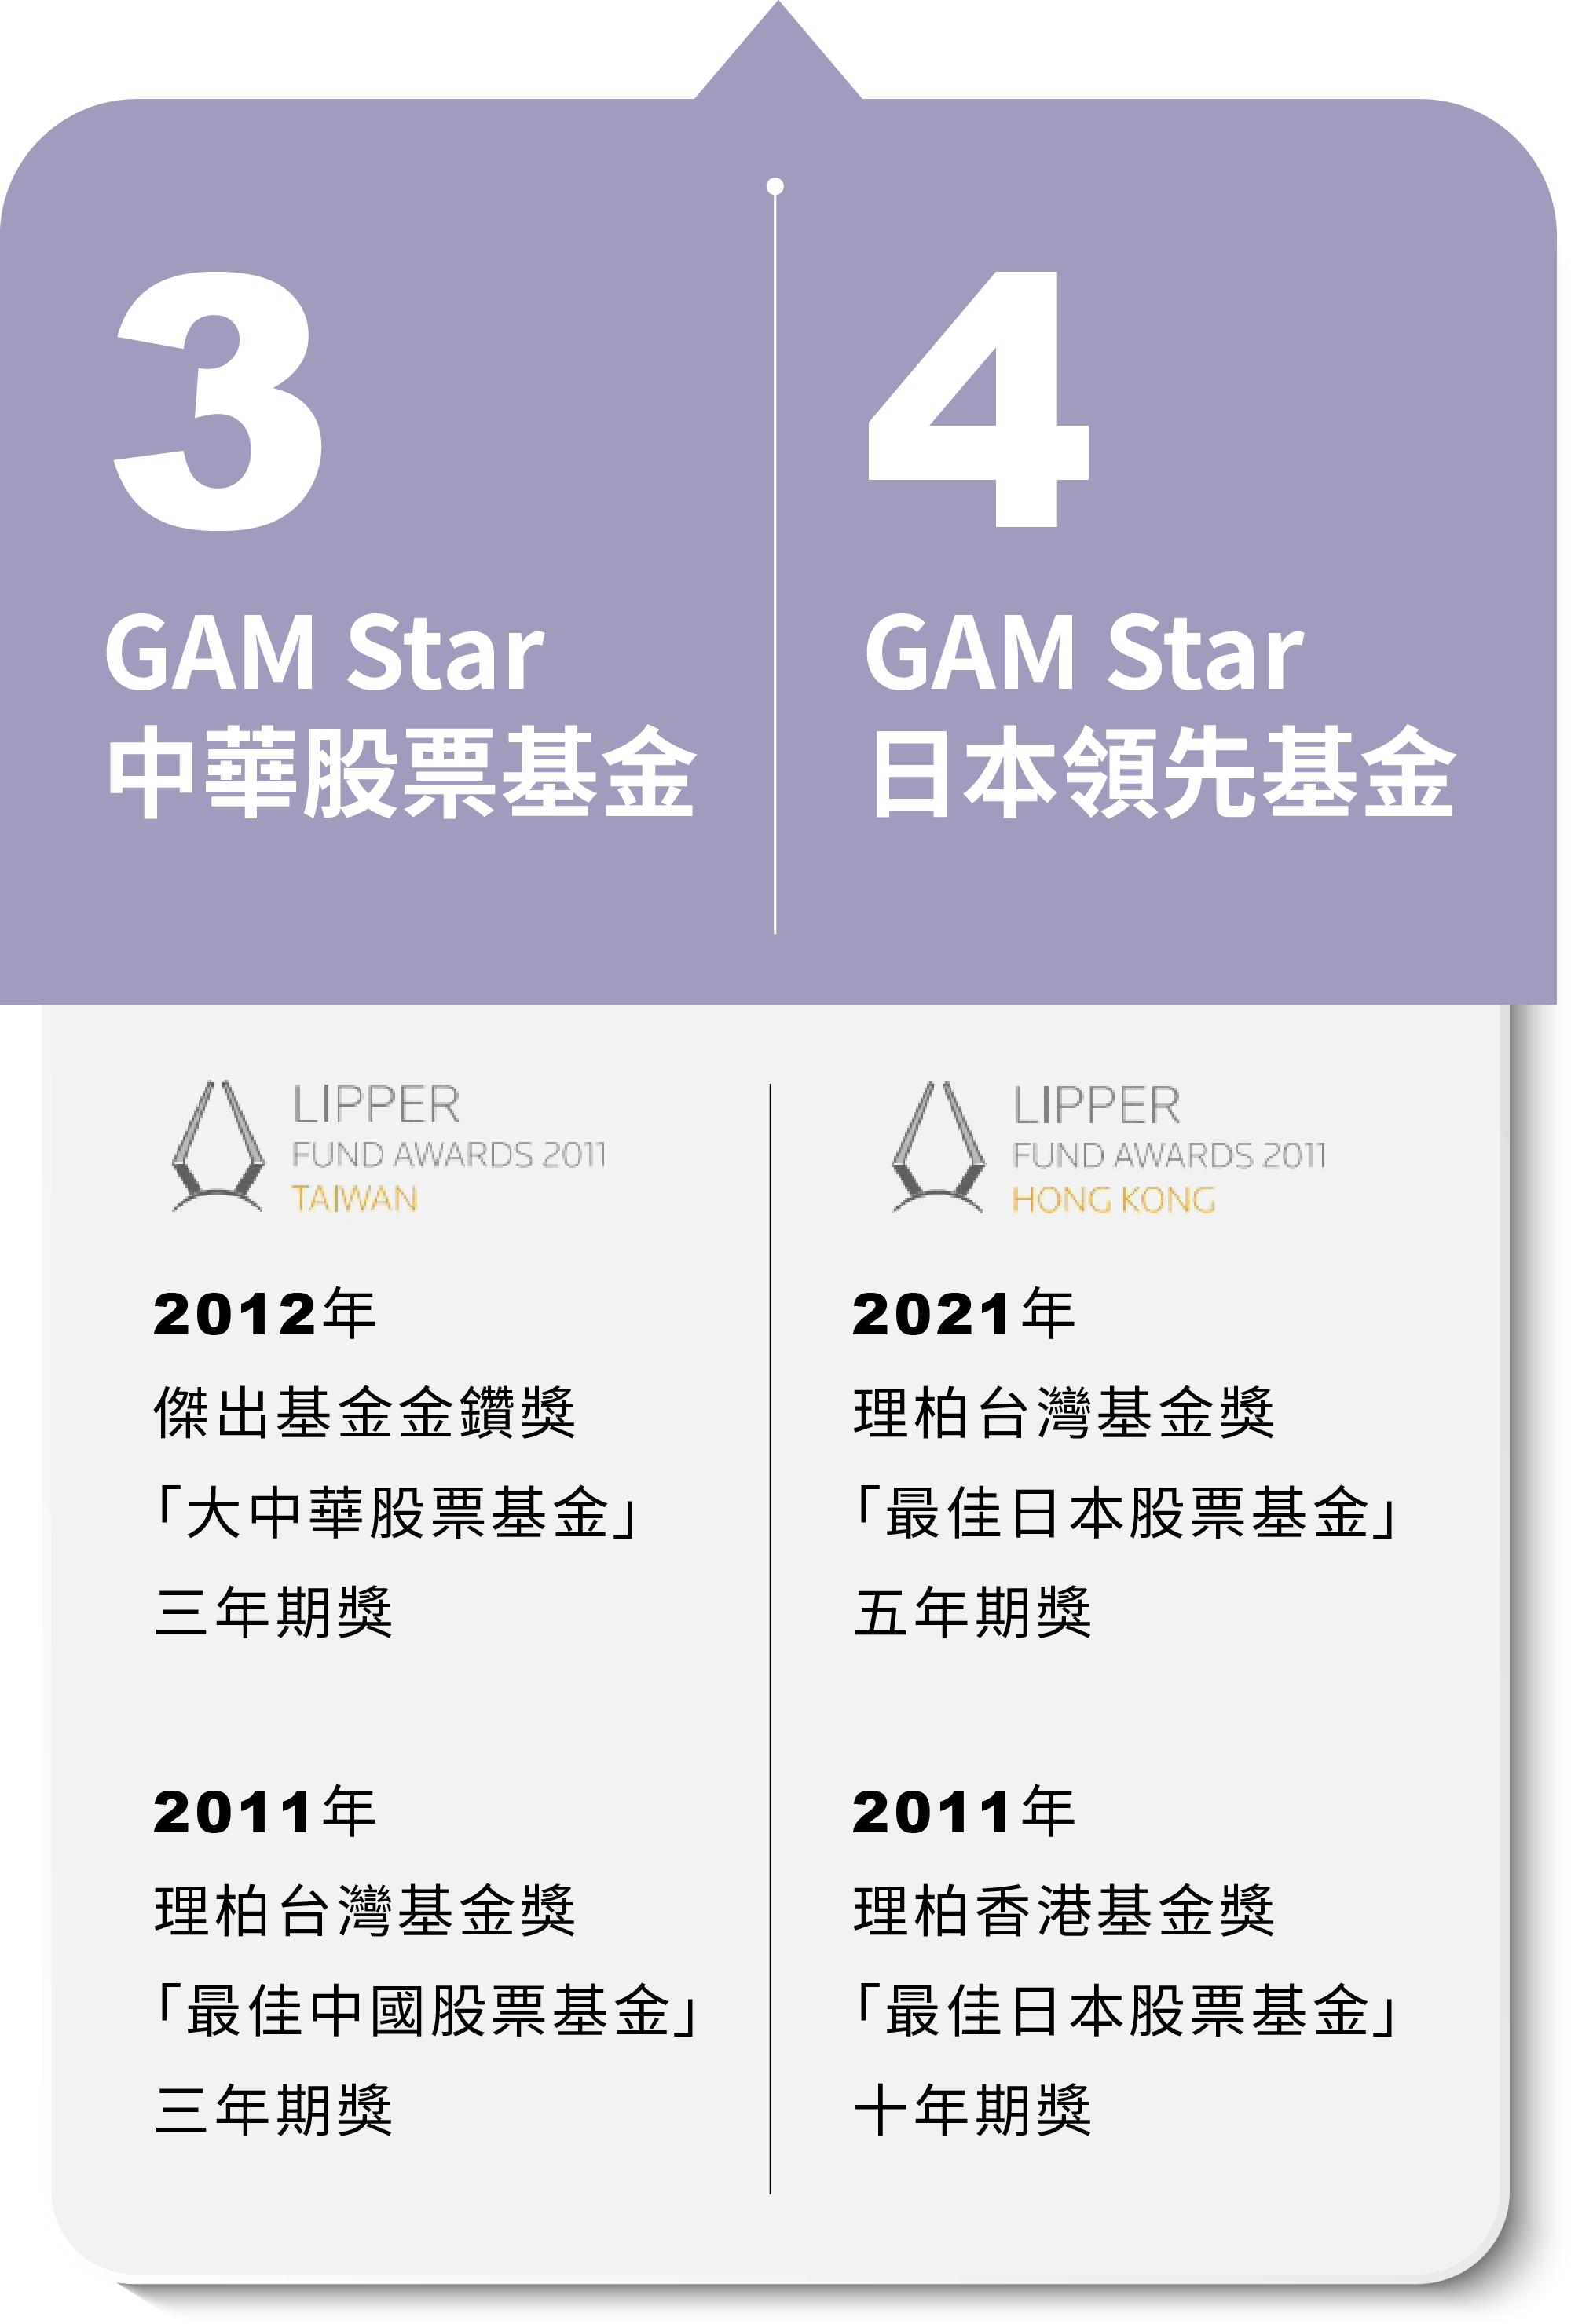 3 GAM Star - 中華股票基金；4 GAM Star - 日本領先基金